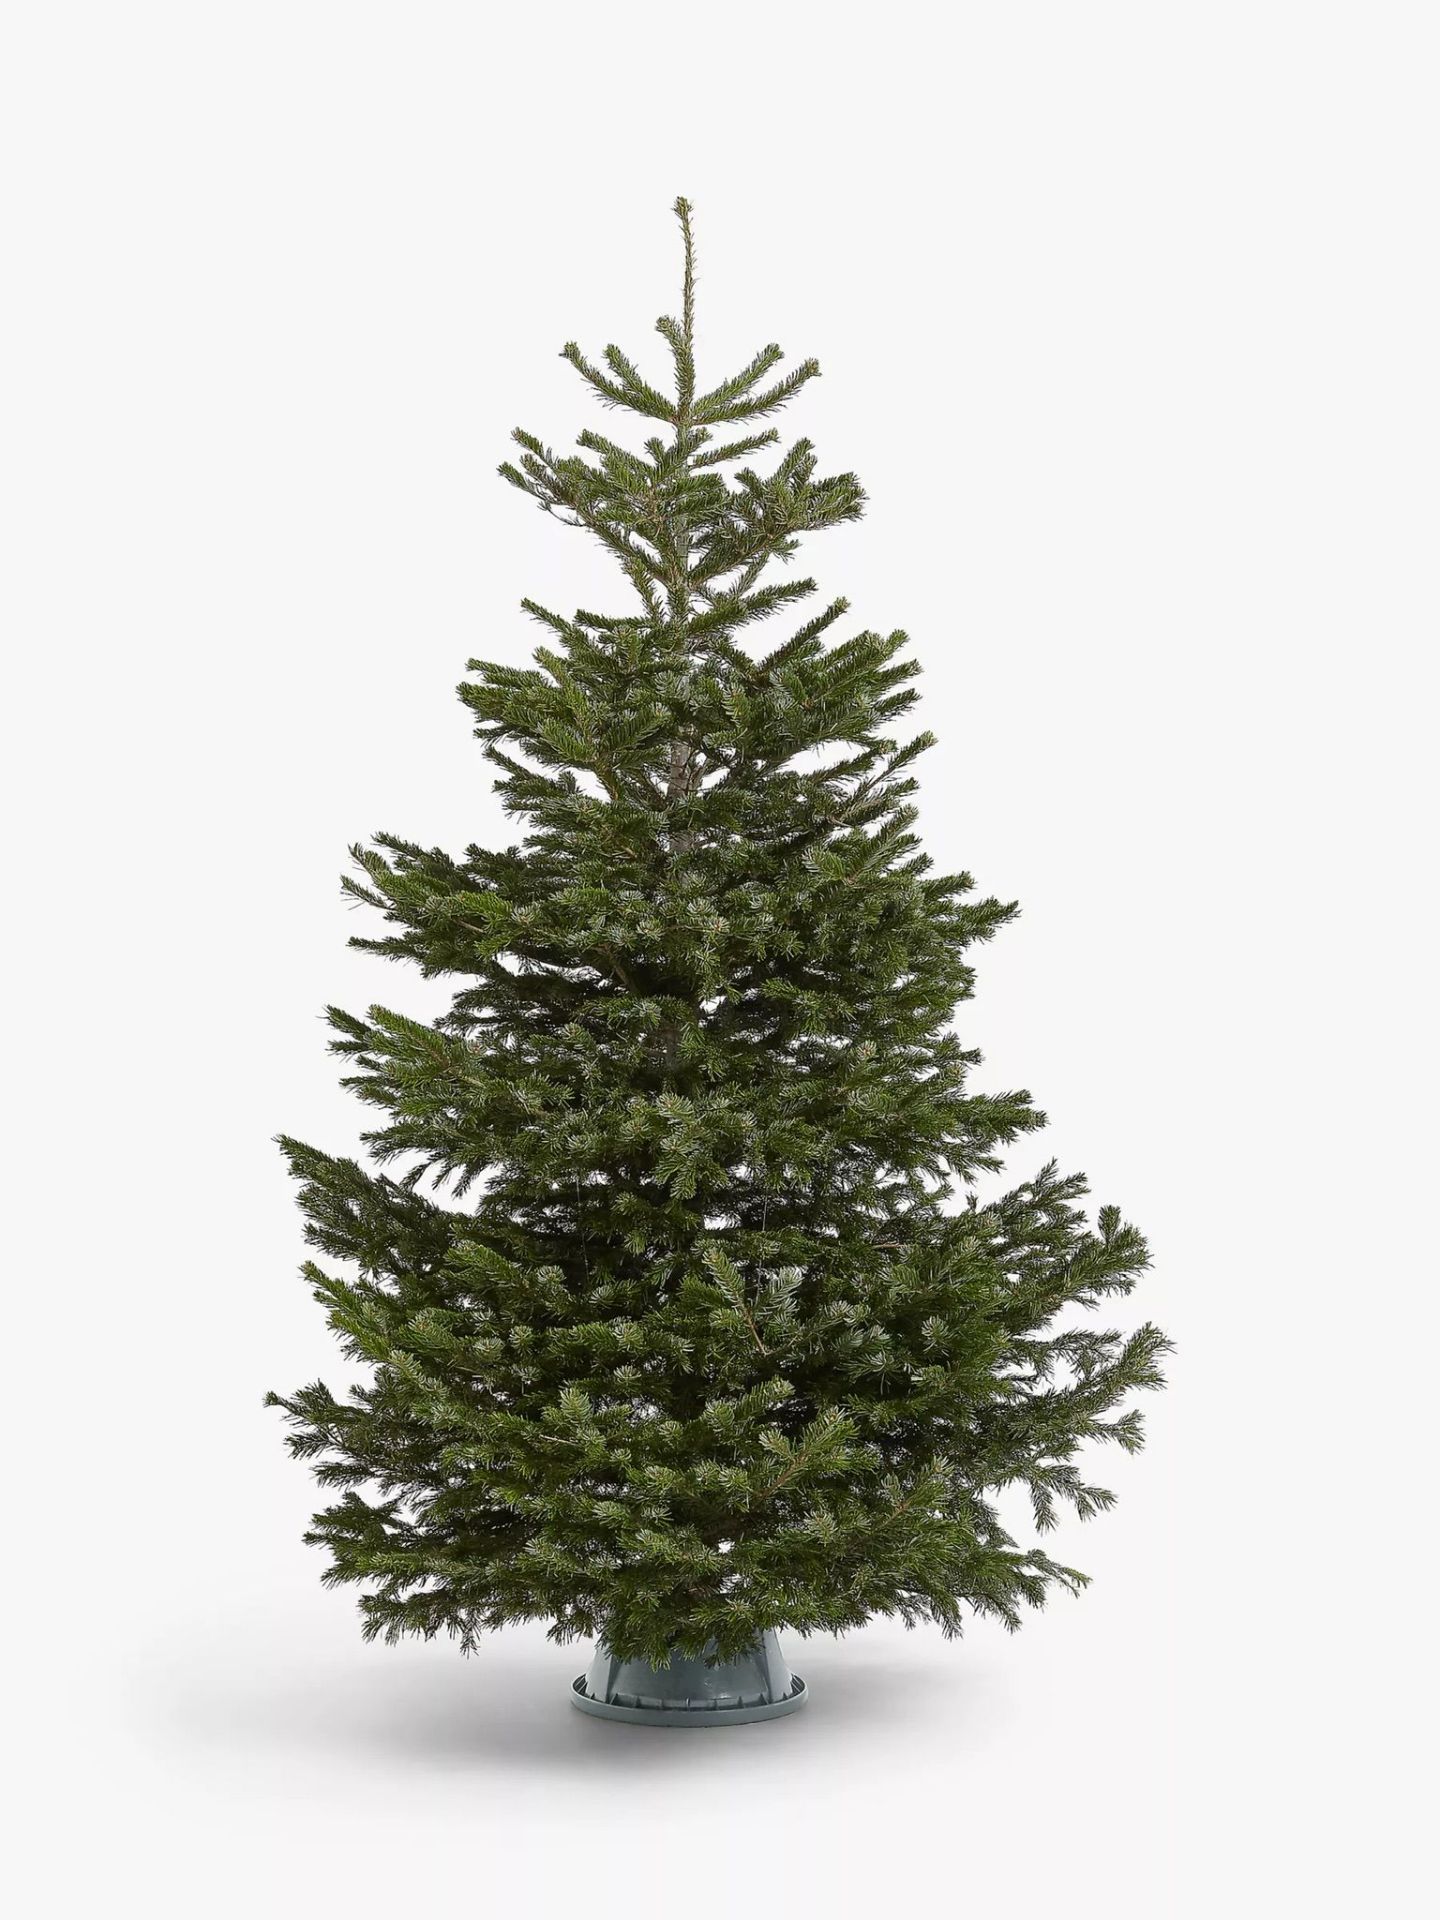 25 x Christmas trees - Nordmann Fir Trees - Quality Christmas trees